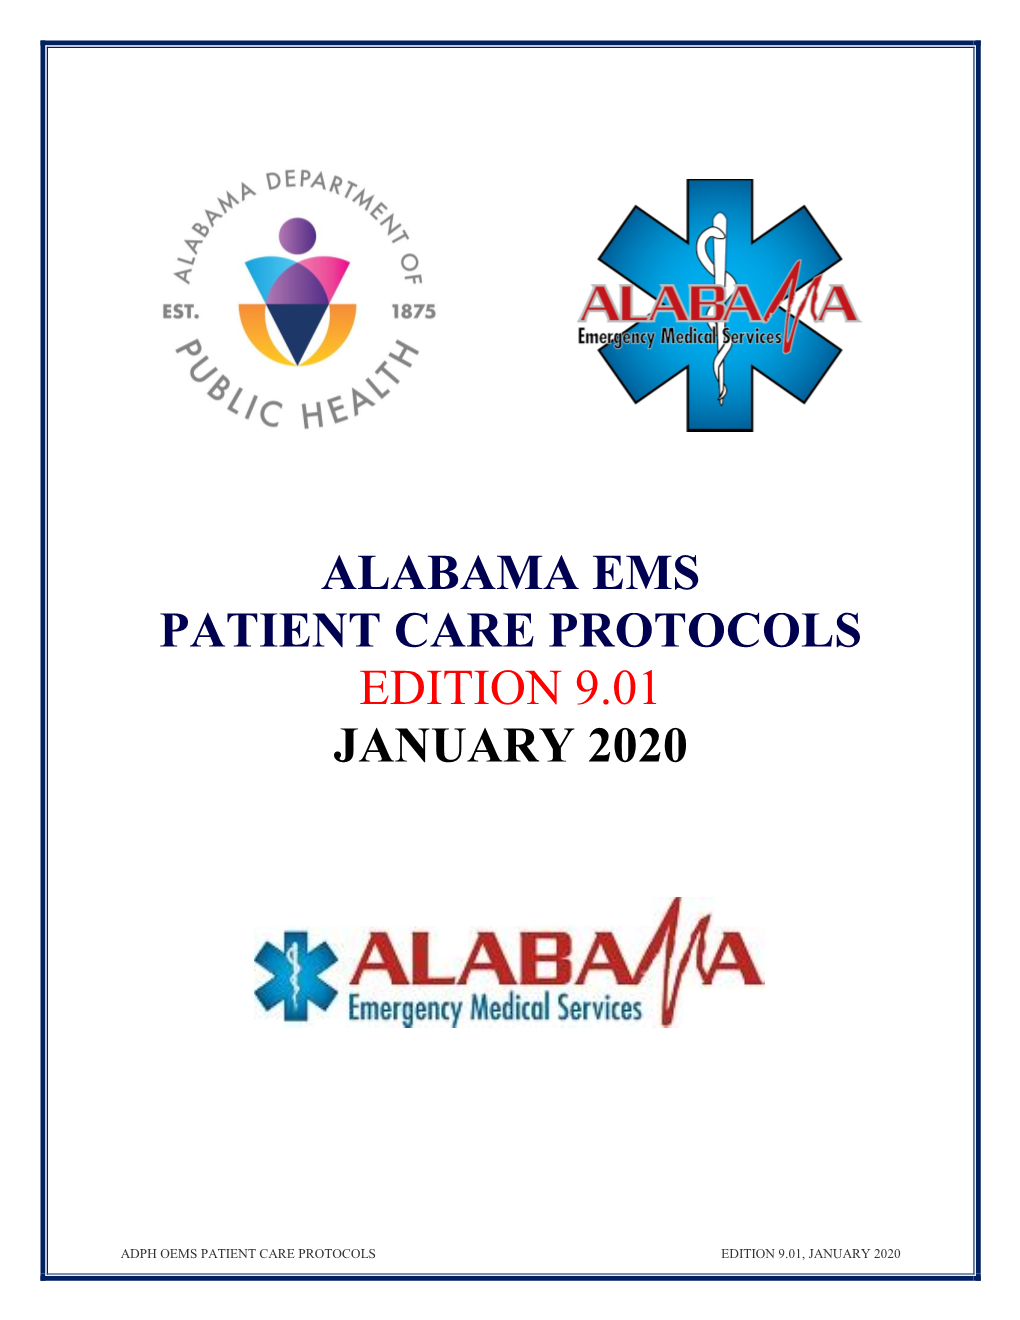 Alabama Ems Patient Care Protocols Edition 9.01 January 2020